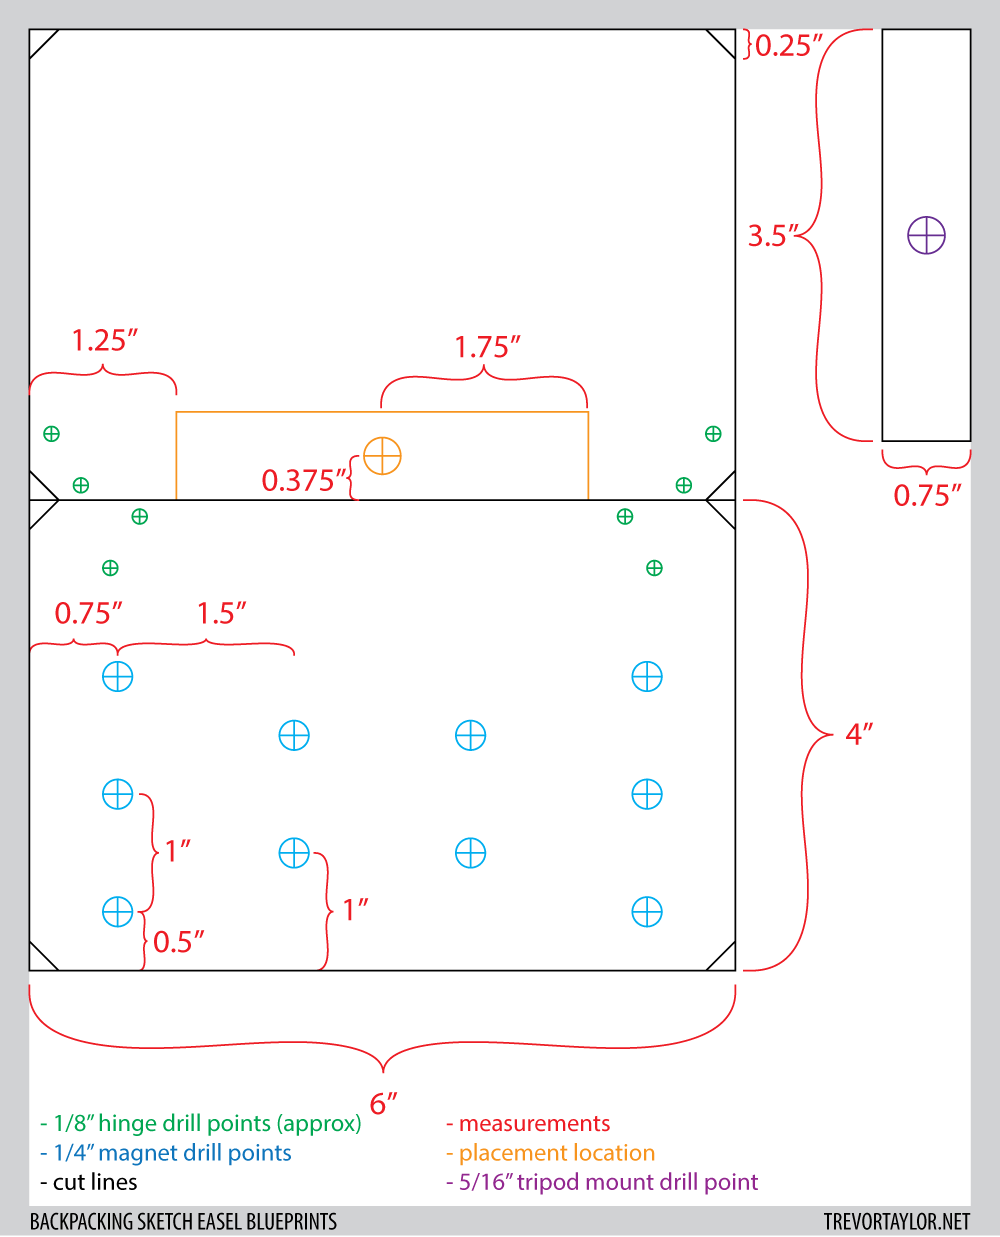 Ultralight Backpacking Sketch Easel Blueprints